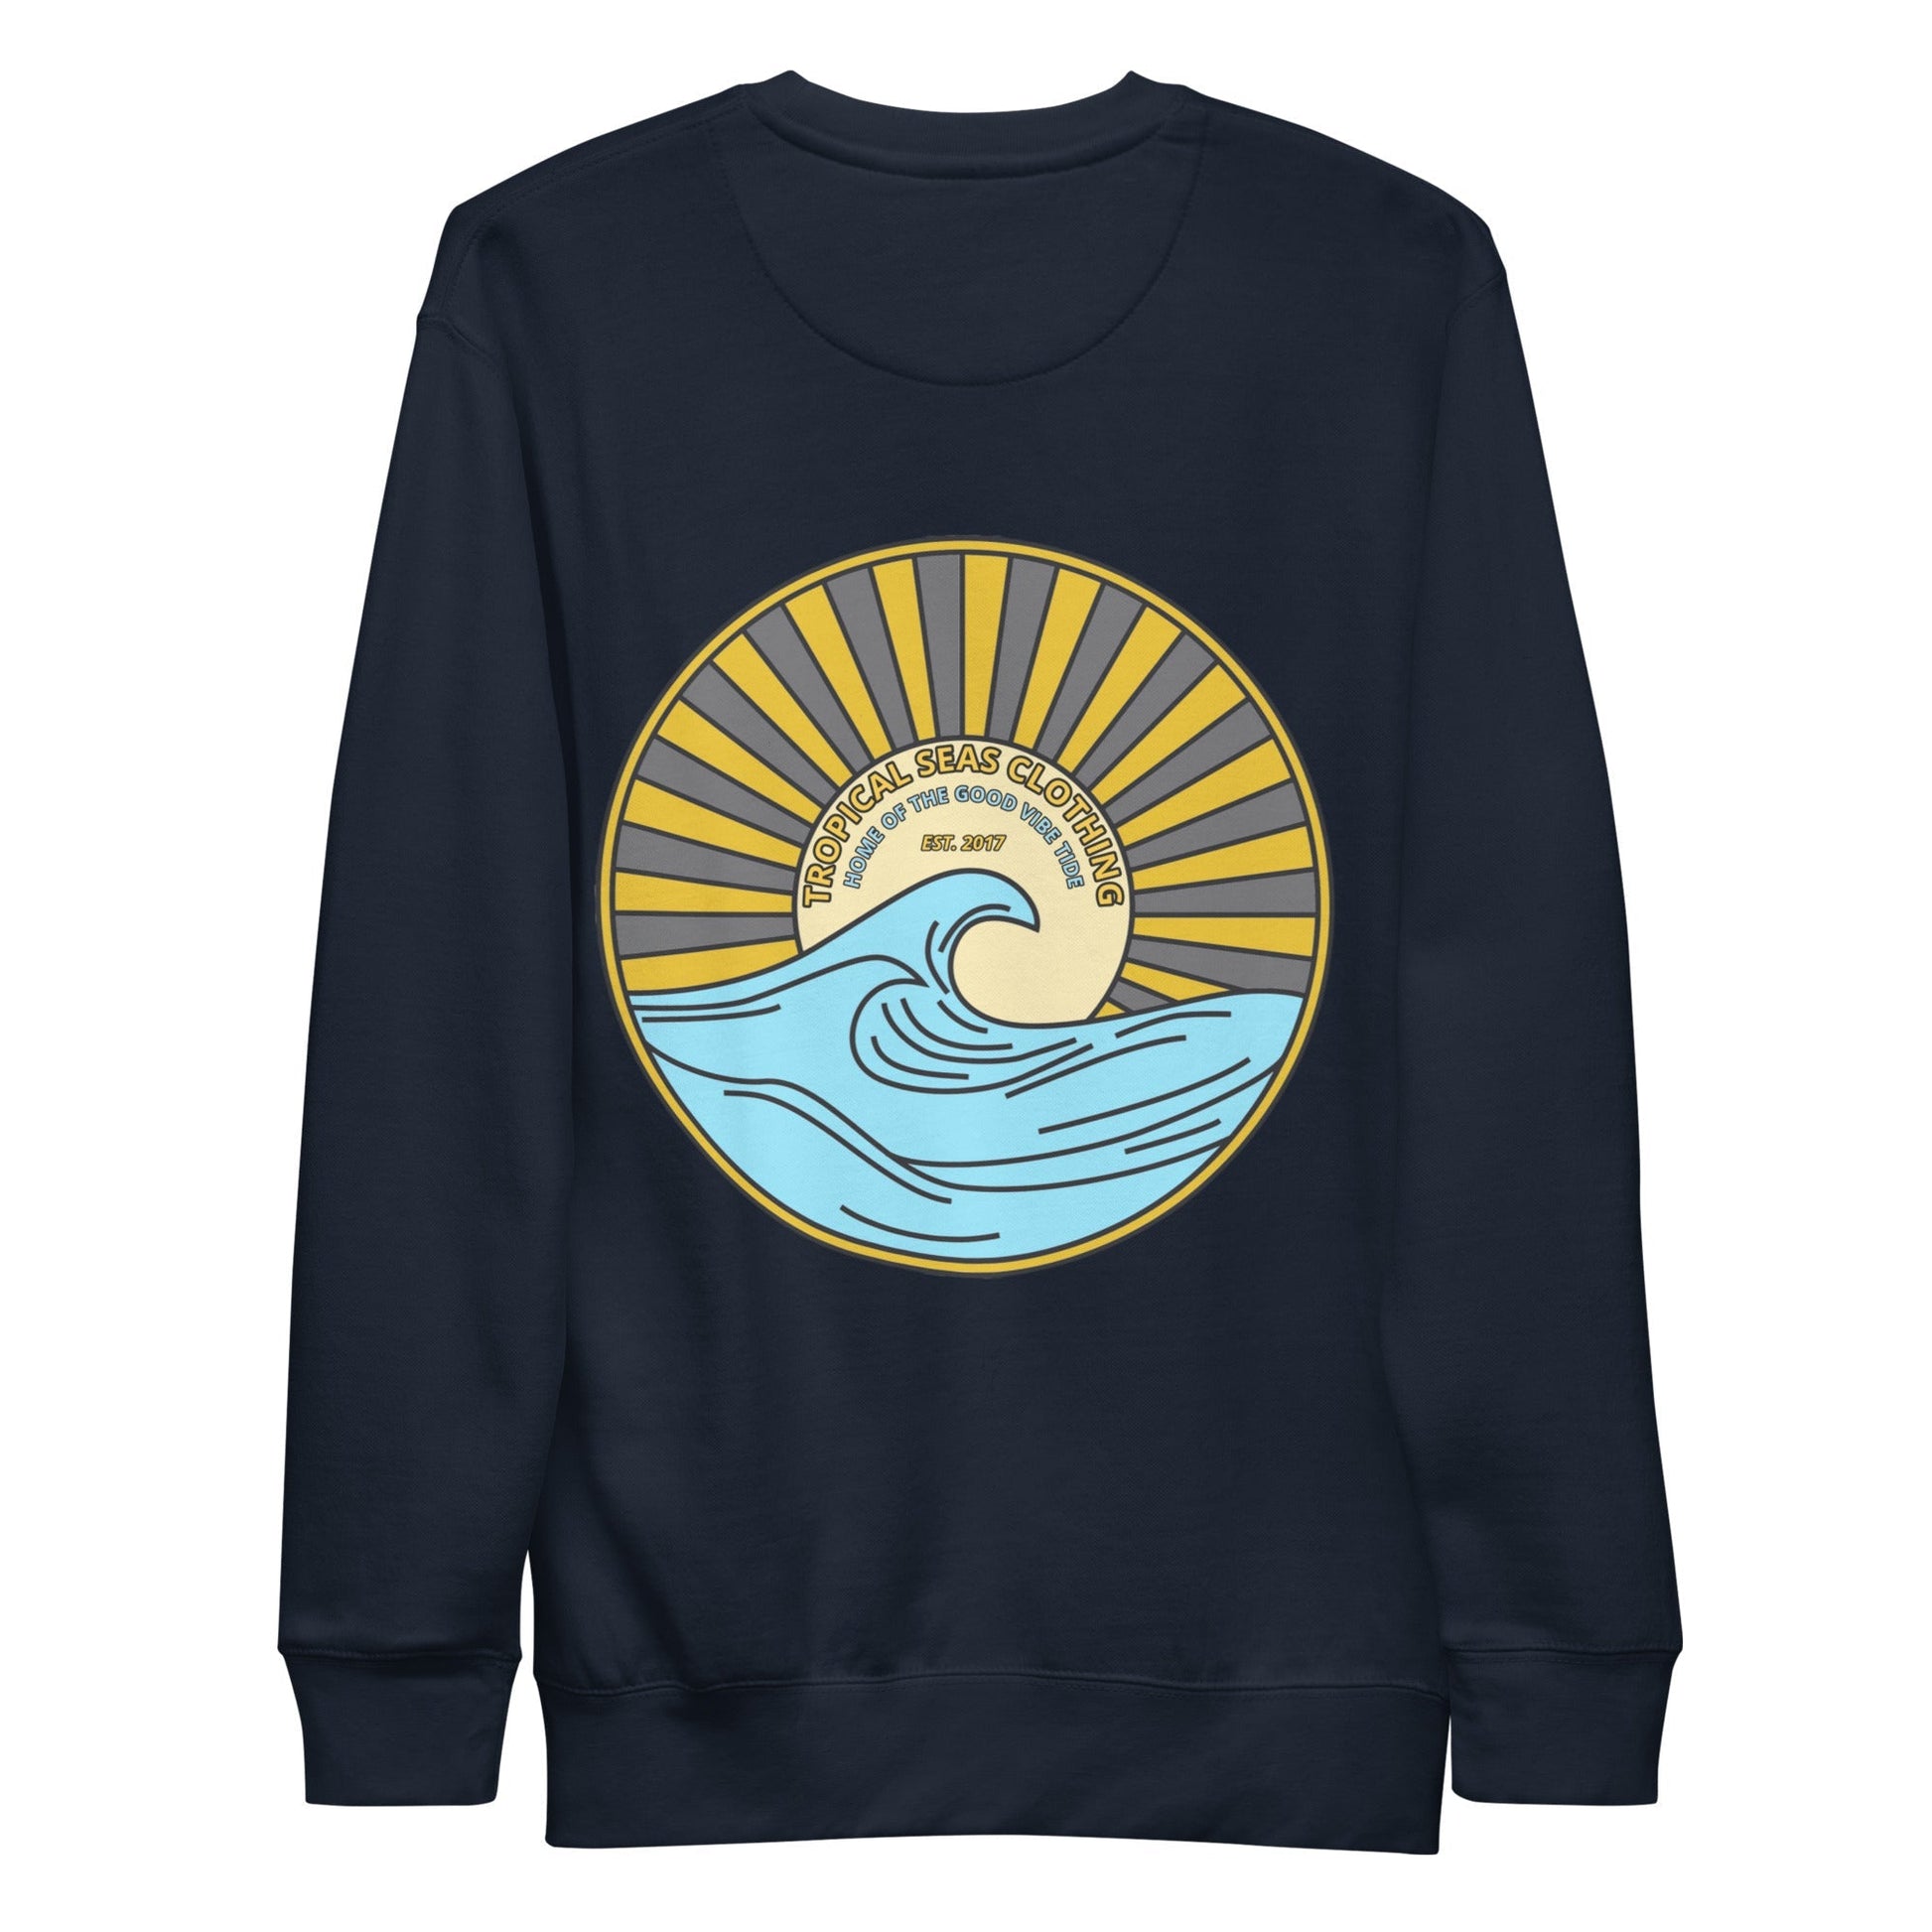 Premium Local Sunrise Sweatshirt - Tropical Seas Clothing 